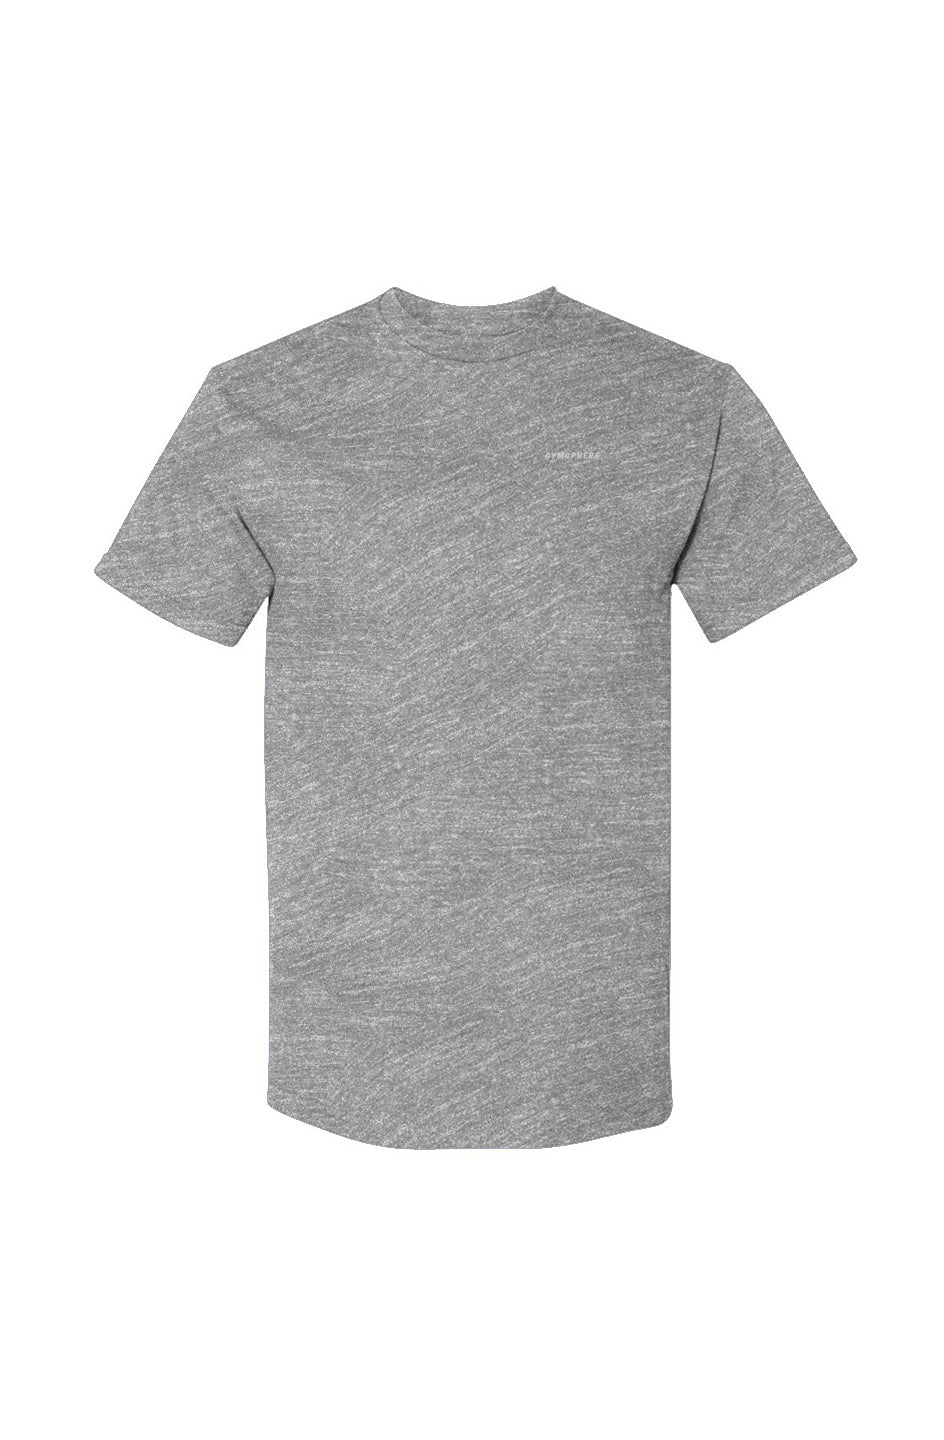 Men's Classic Fit T-Shirt